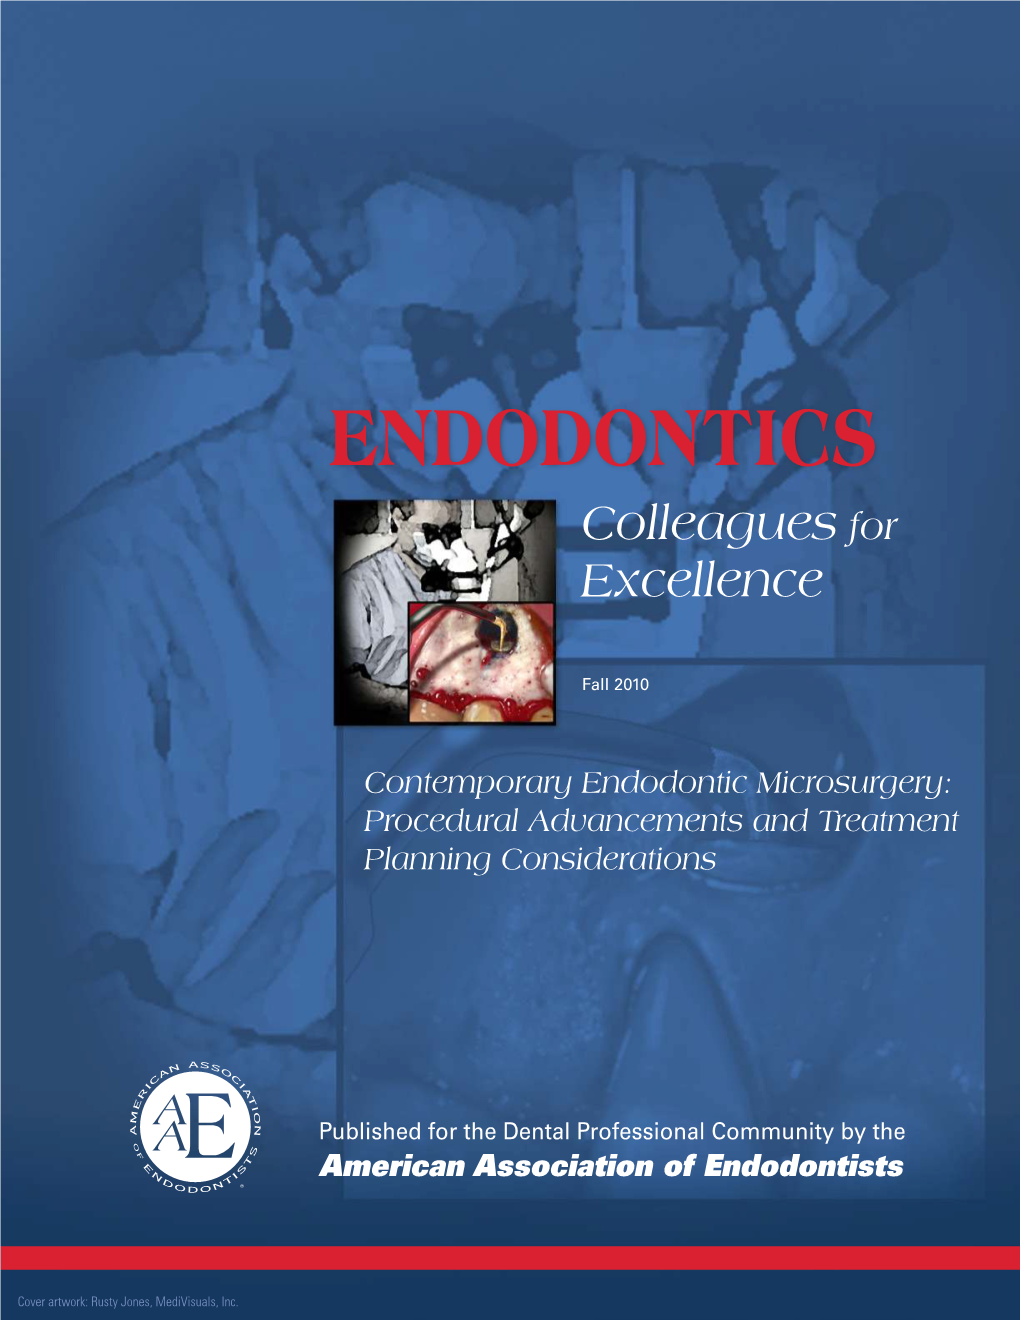 Contemporary Endodontic Microsurgery